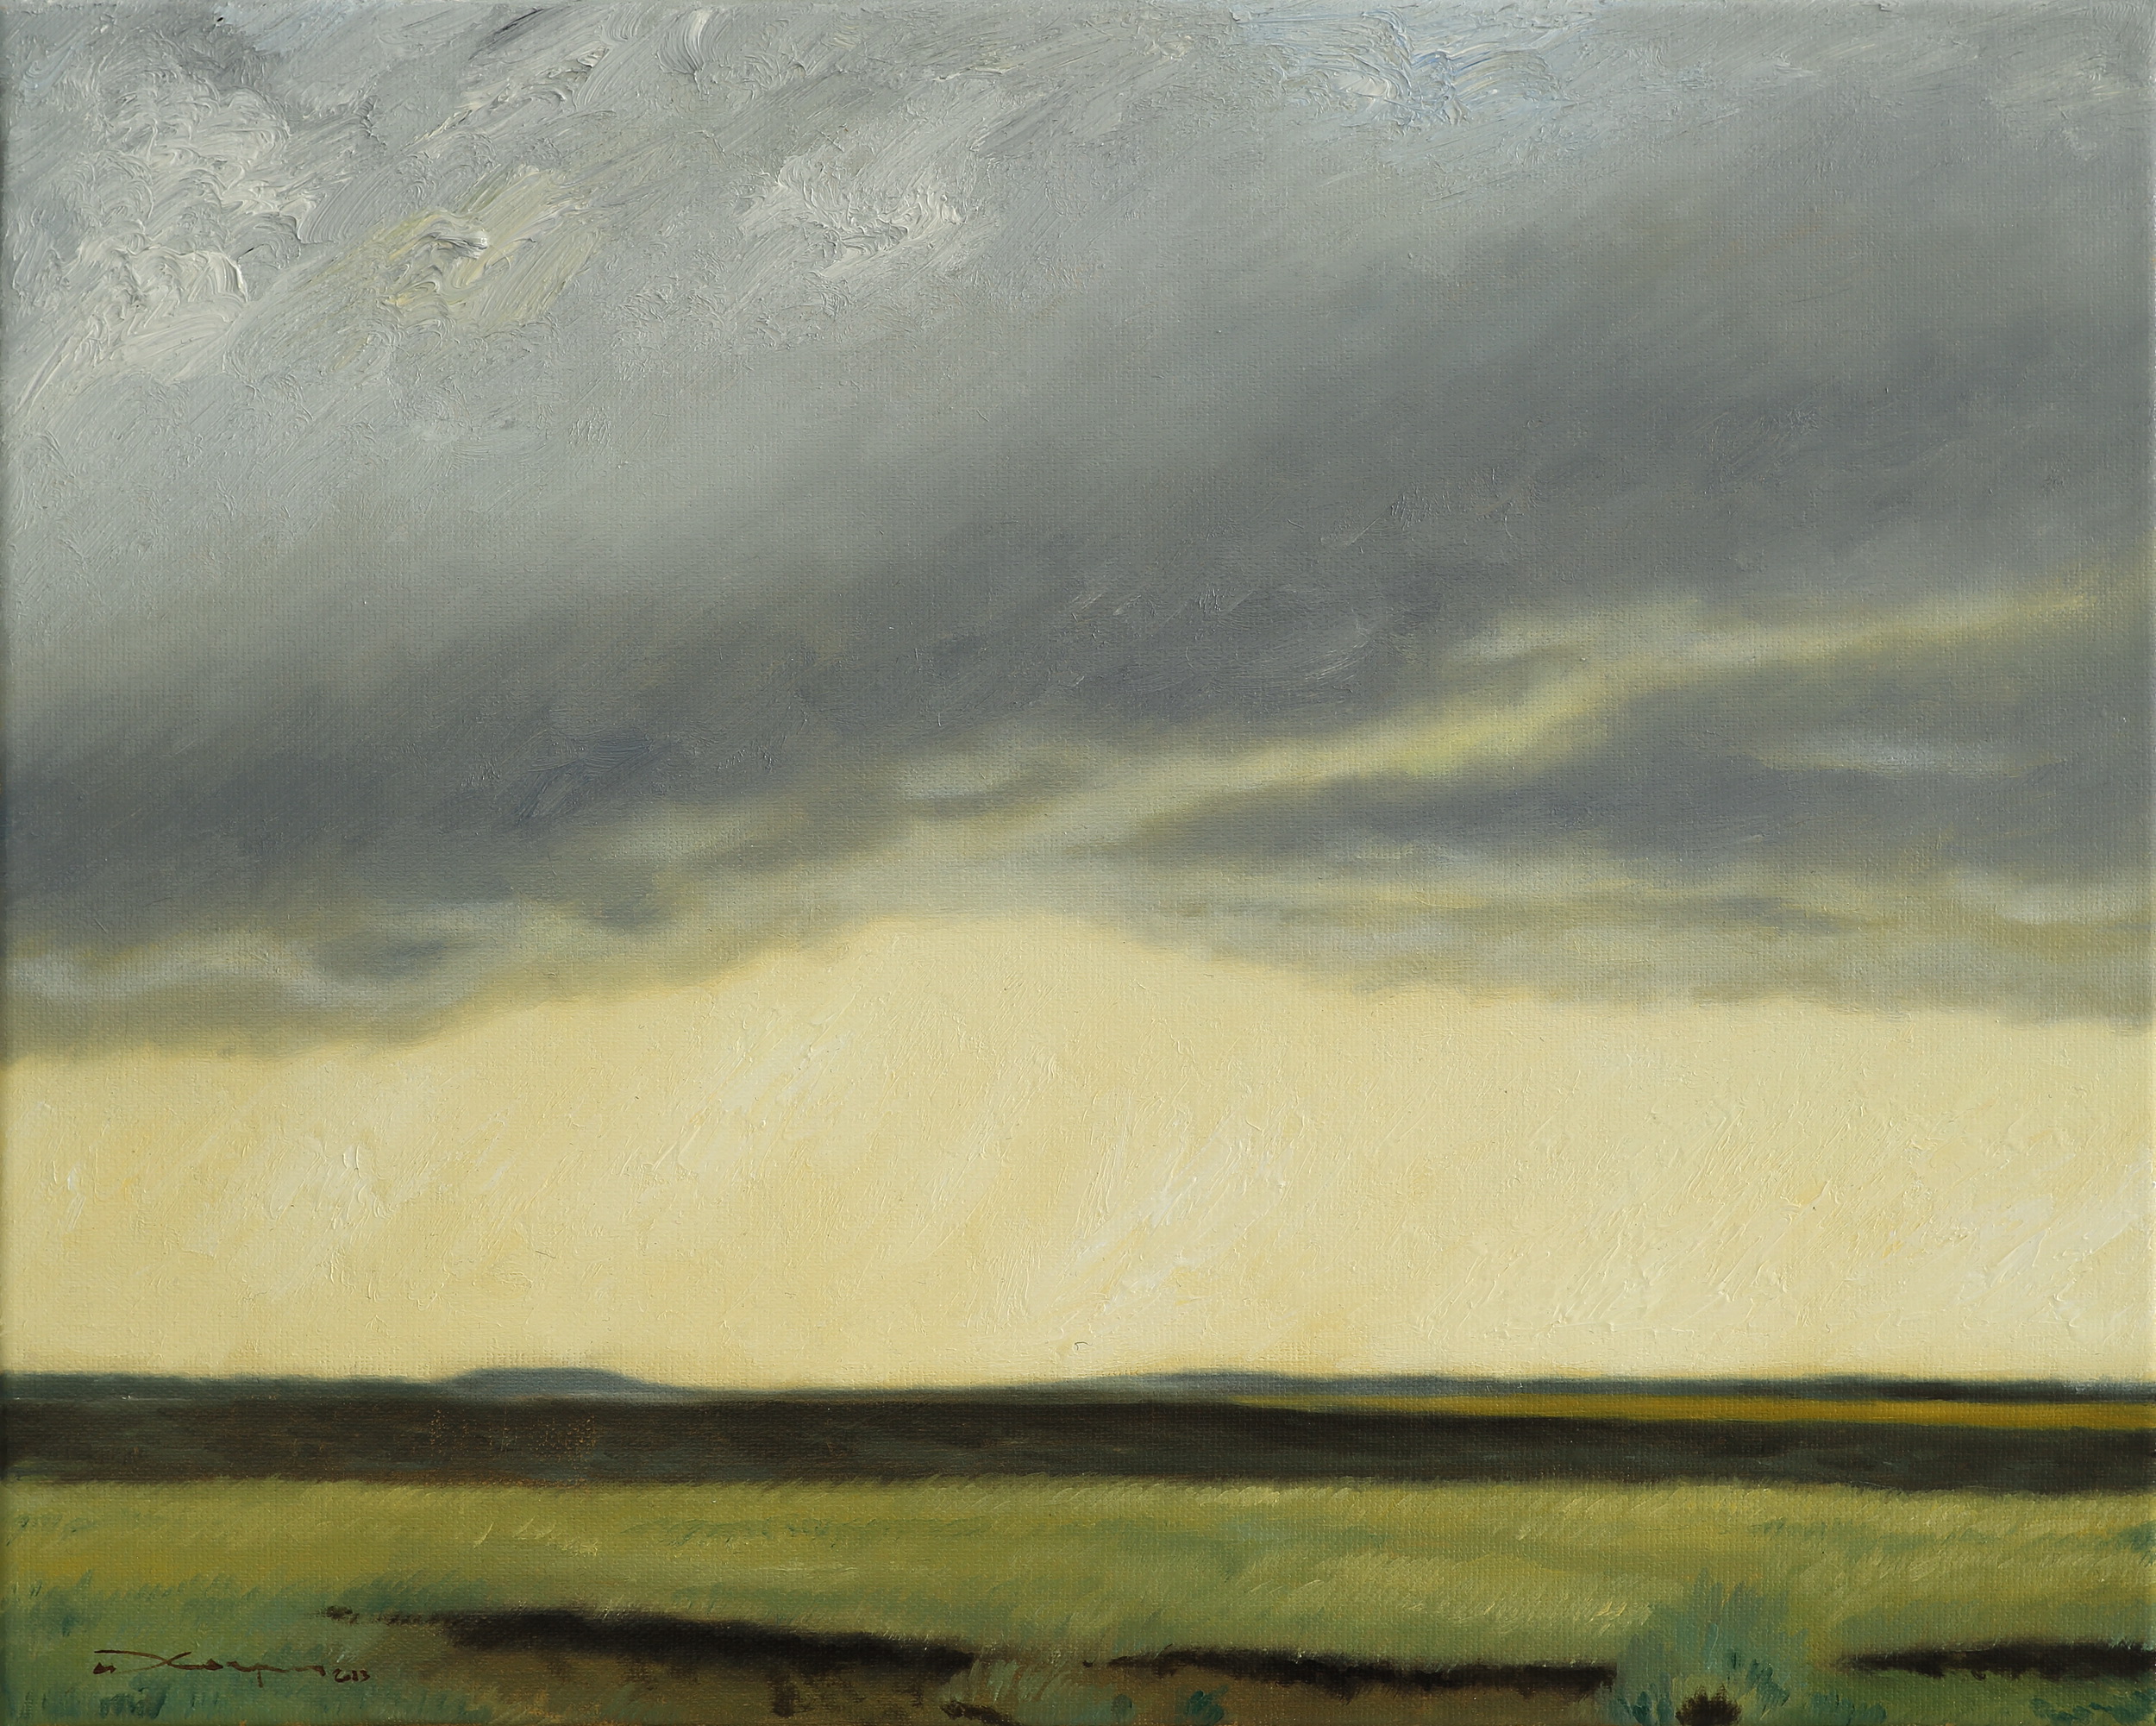 Plowed Field - 1, Ilya Khokhrin, Buy the painting Oil